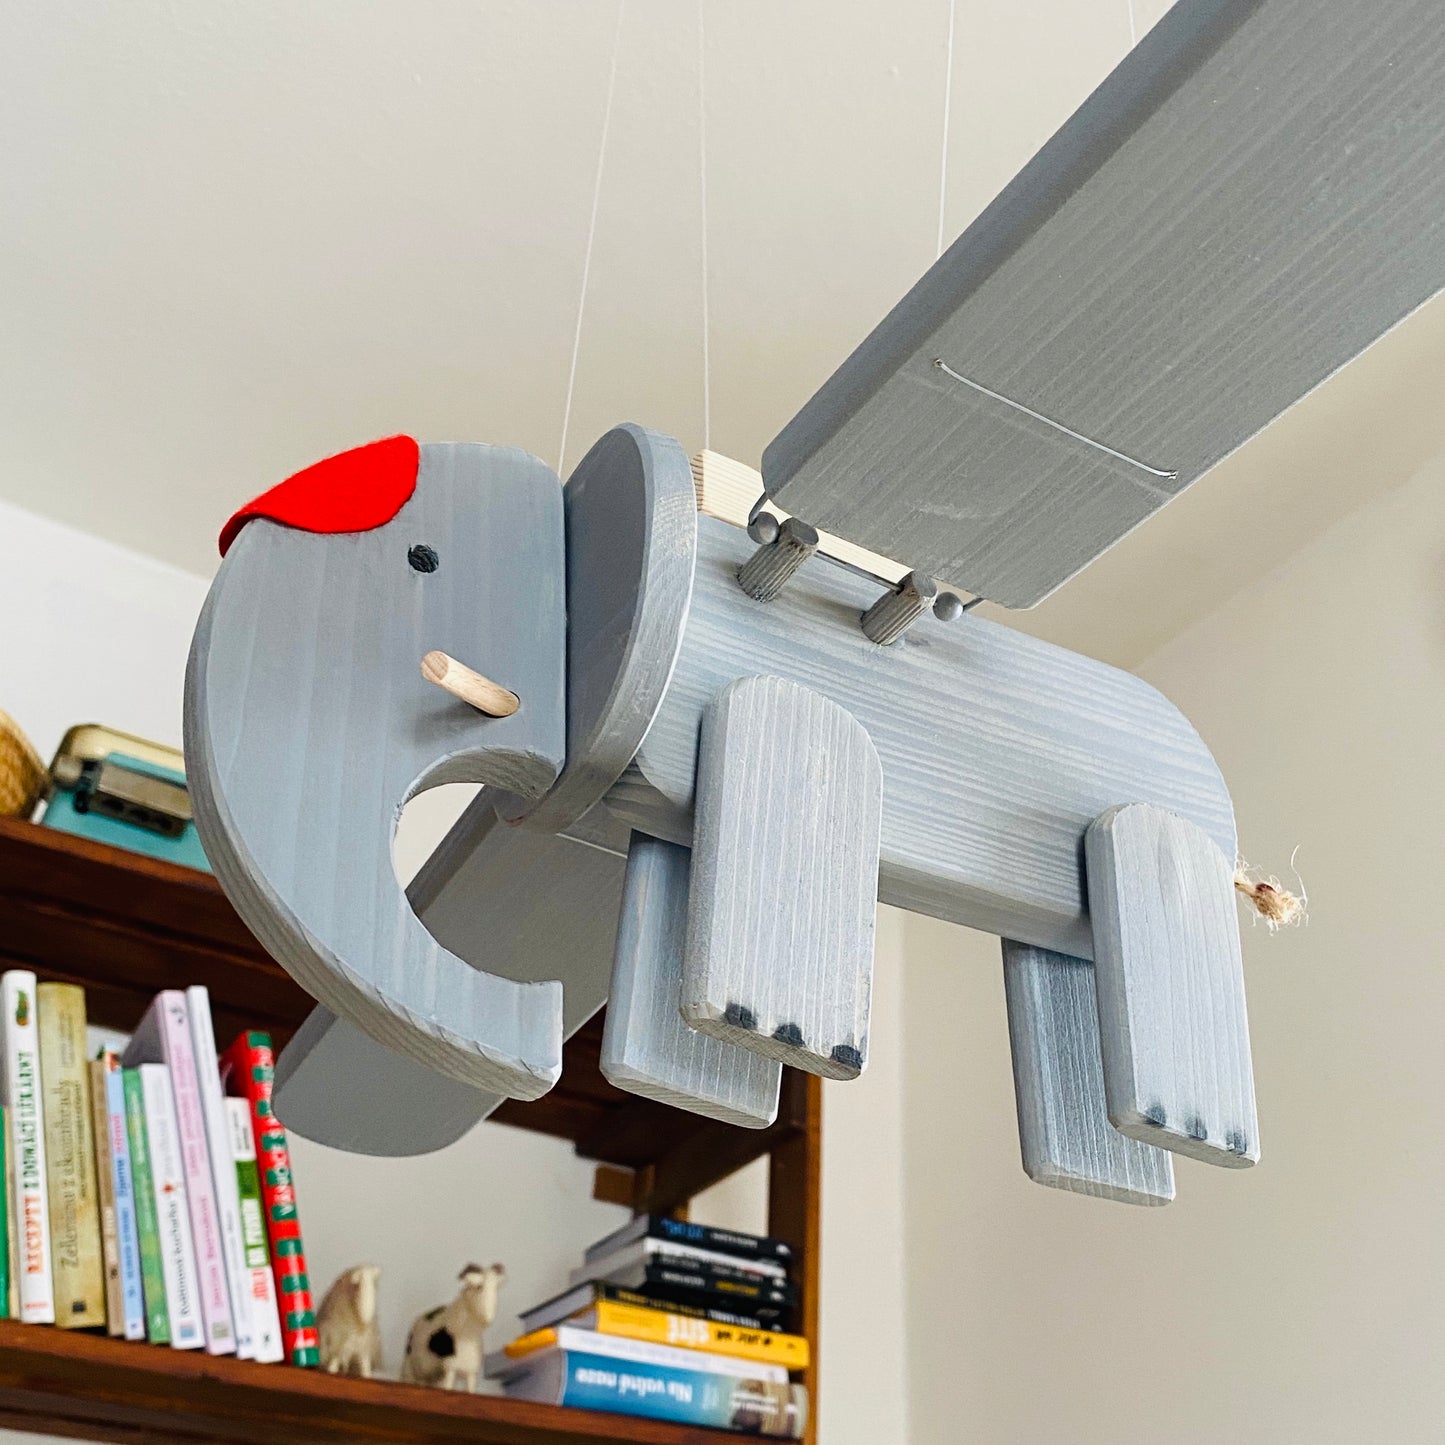 Flying Gray Elephant Wooden Nursery Mobile - Unisex Nursery Decor